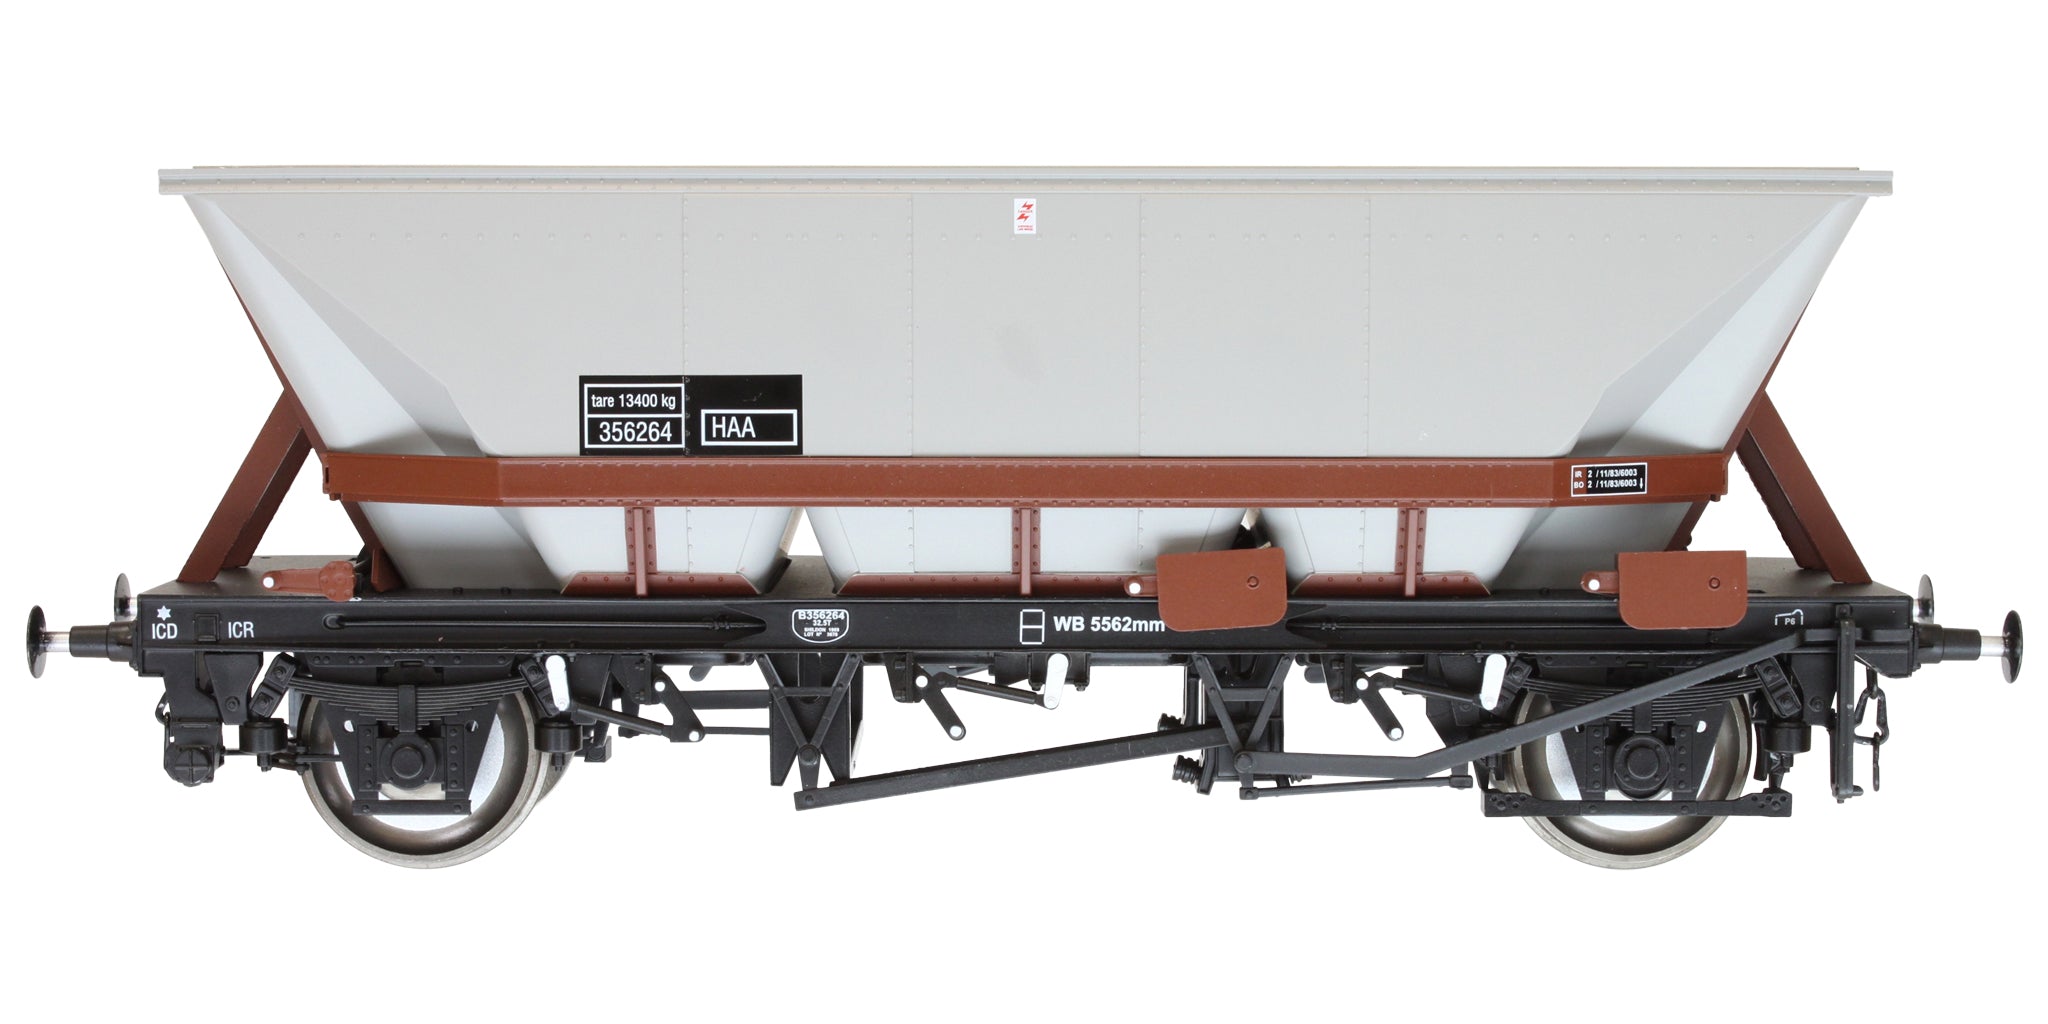 7F-048-010 MGR HAA Coal Wagon (Brown Cradle) #356264